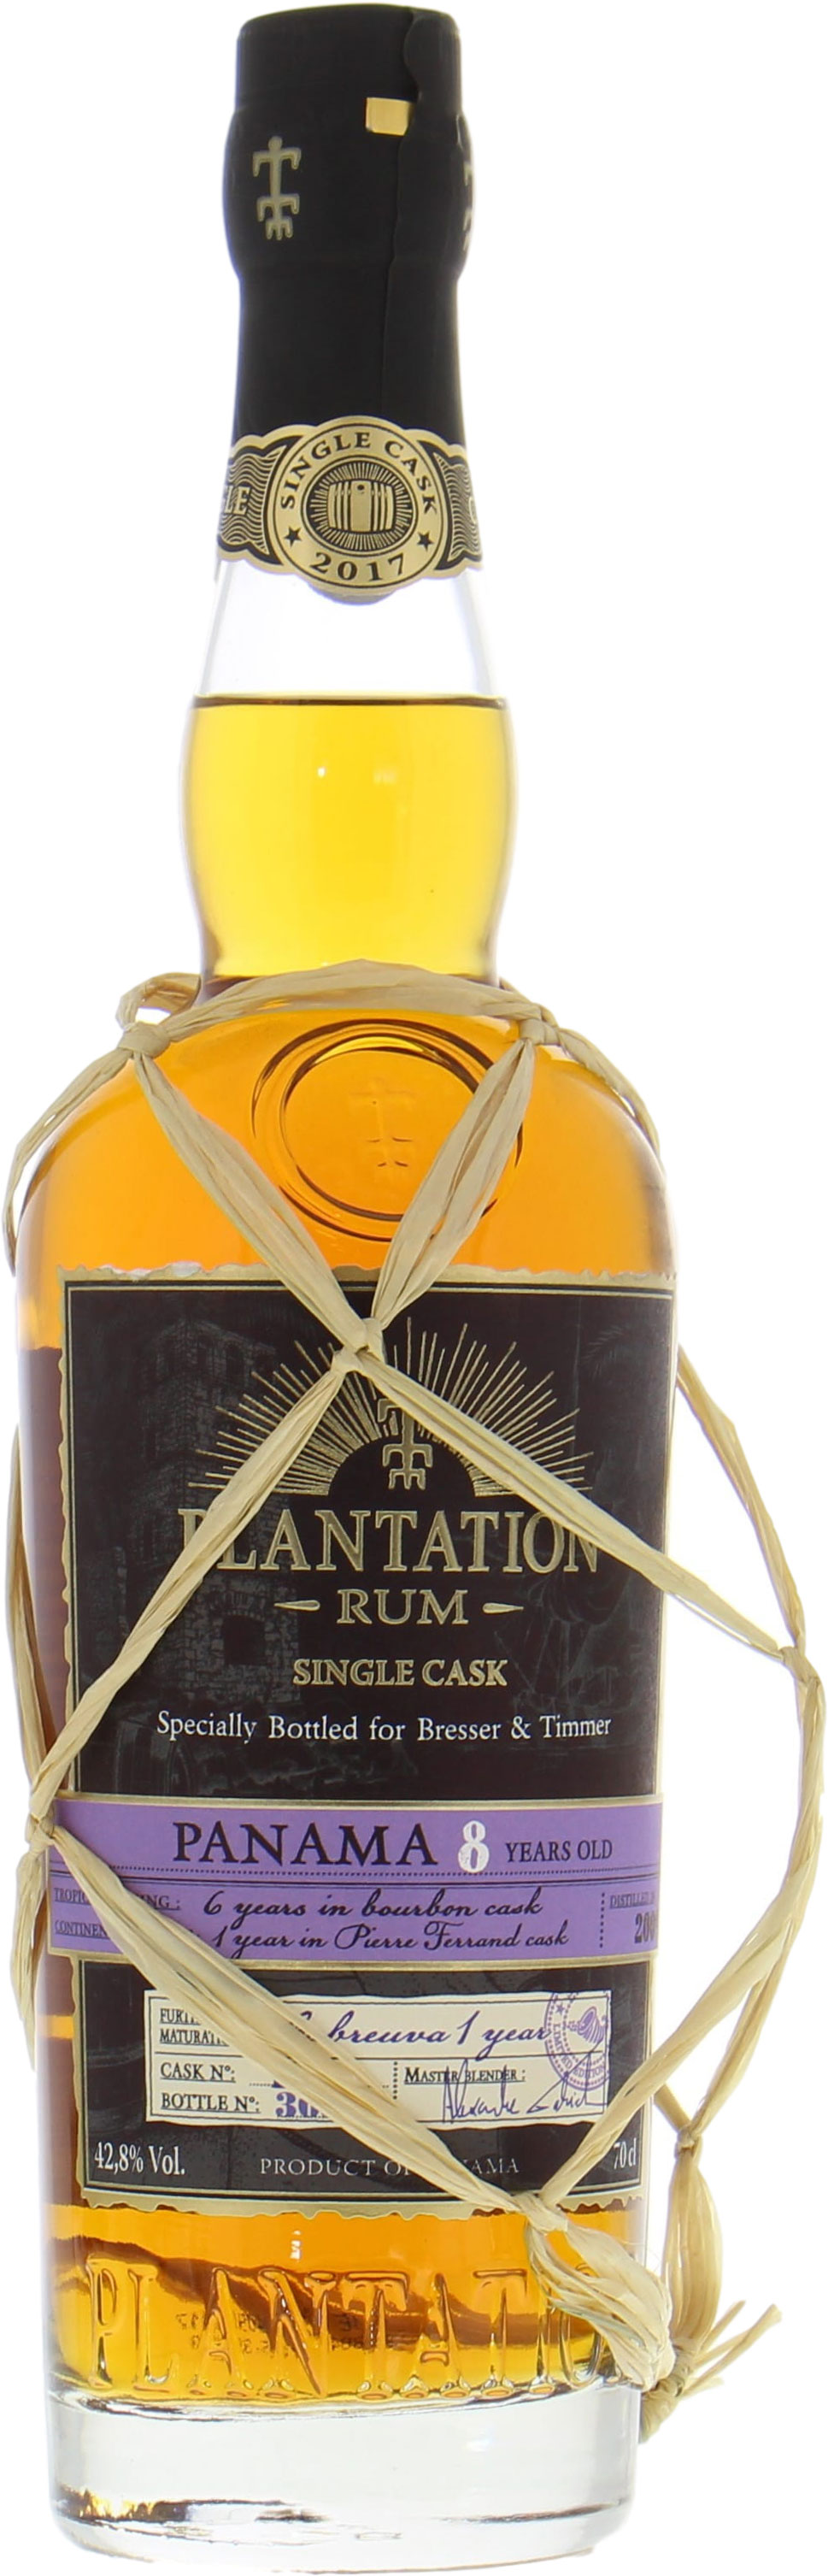 Plantation Rum - Panama 8 Years Old Single Cask:12 42.8% NV